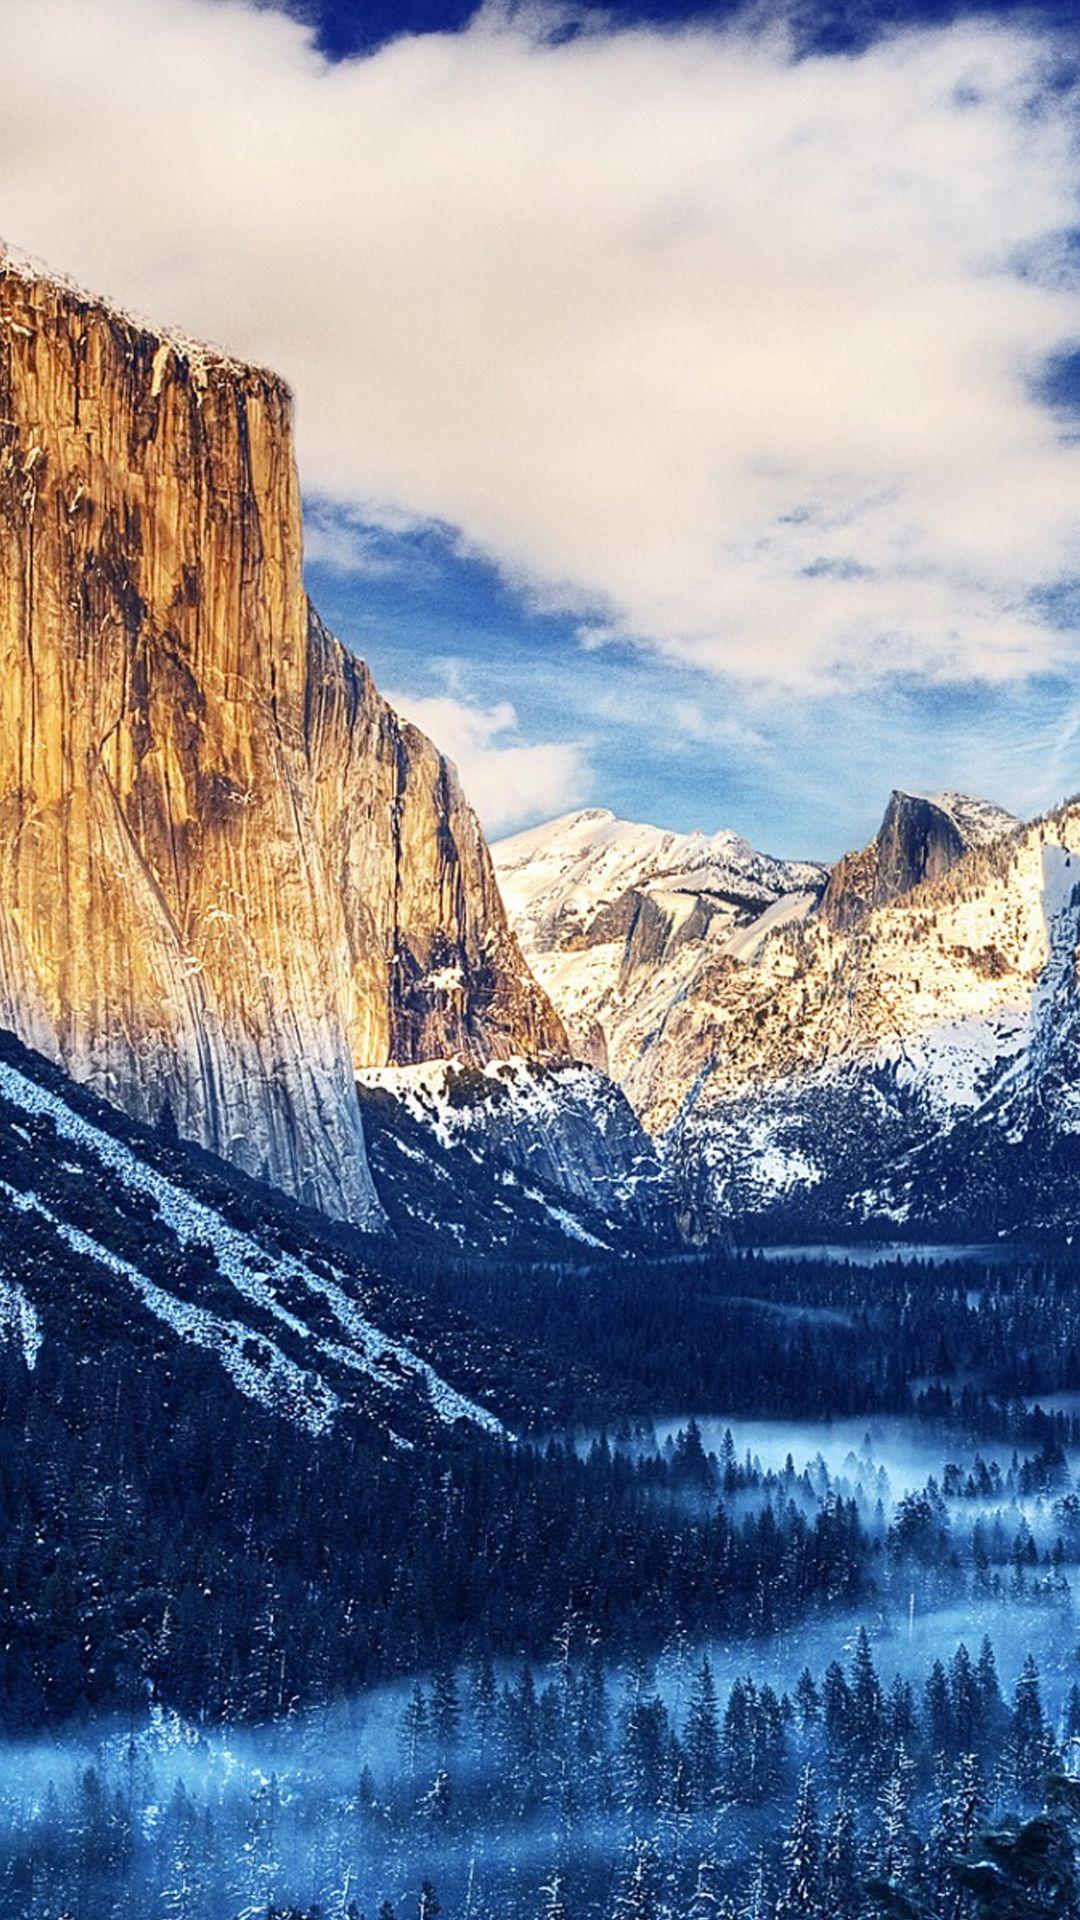 Yosemite Valley IPhone Wallpaper  IPhone Wallpapers  iPhone Wallpapers